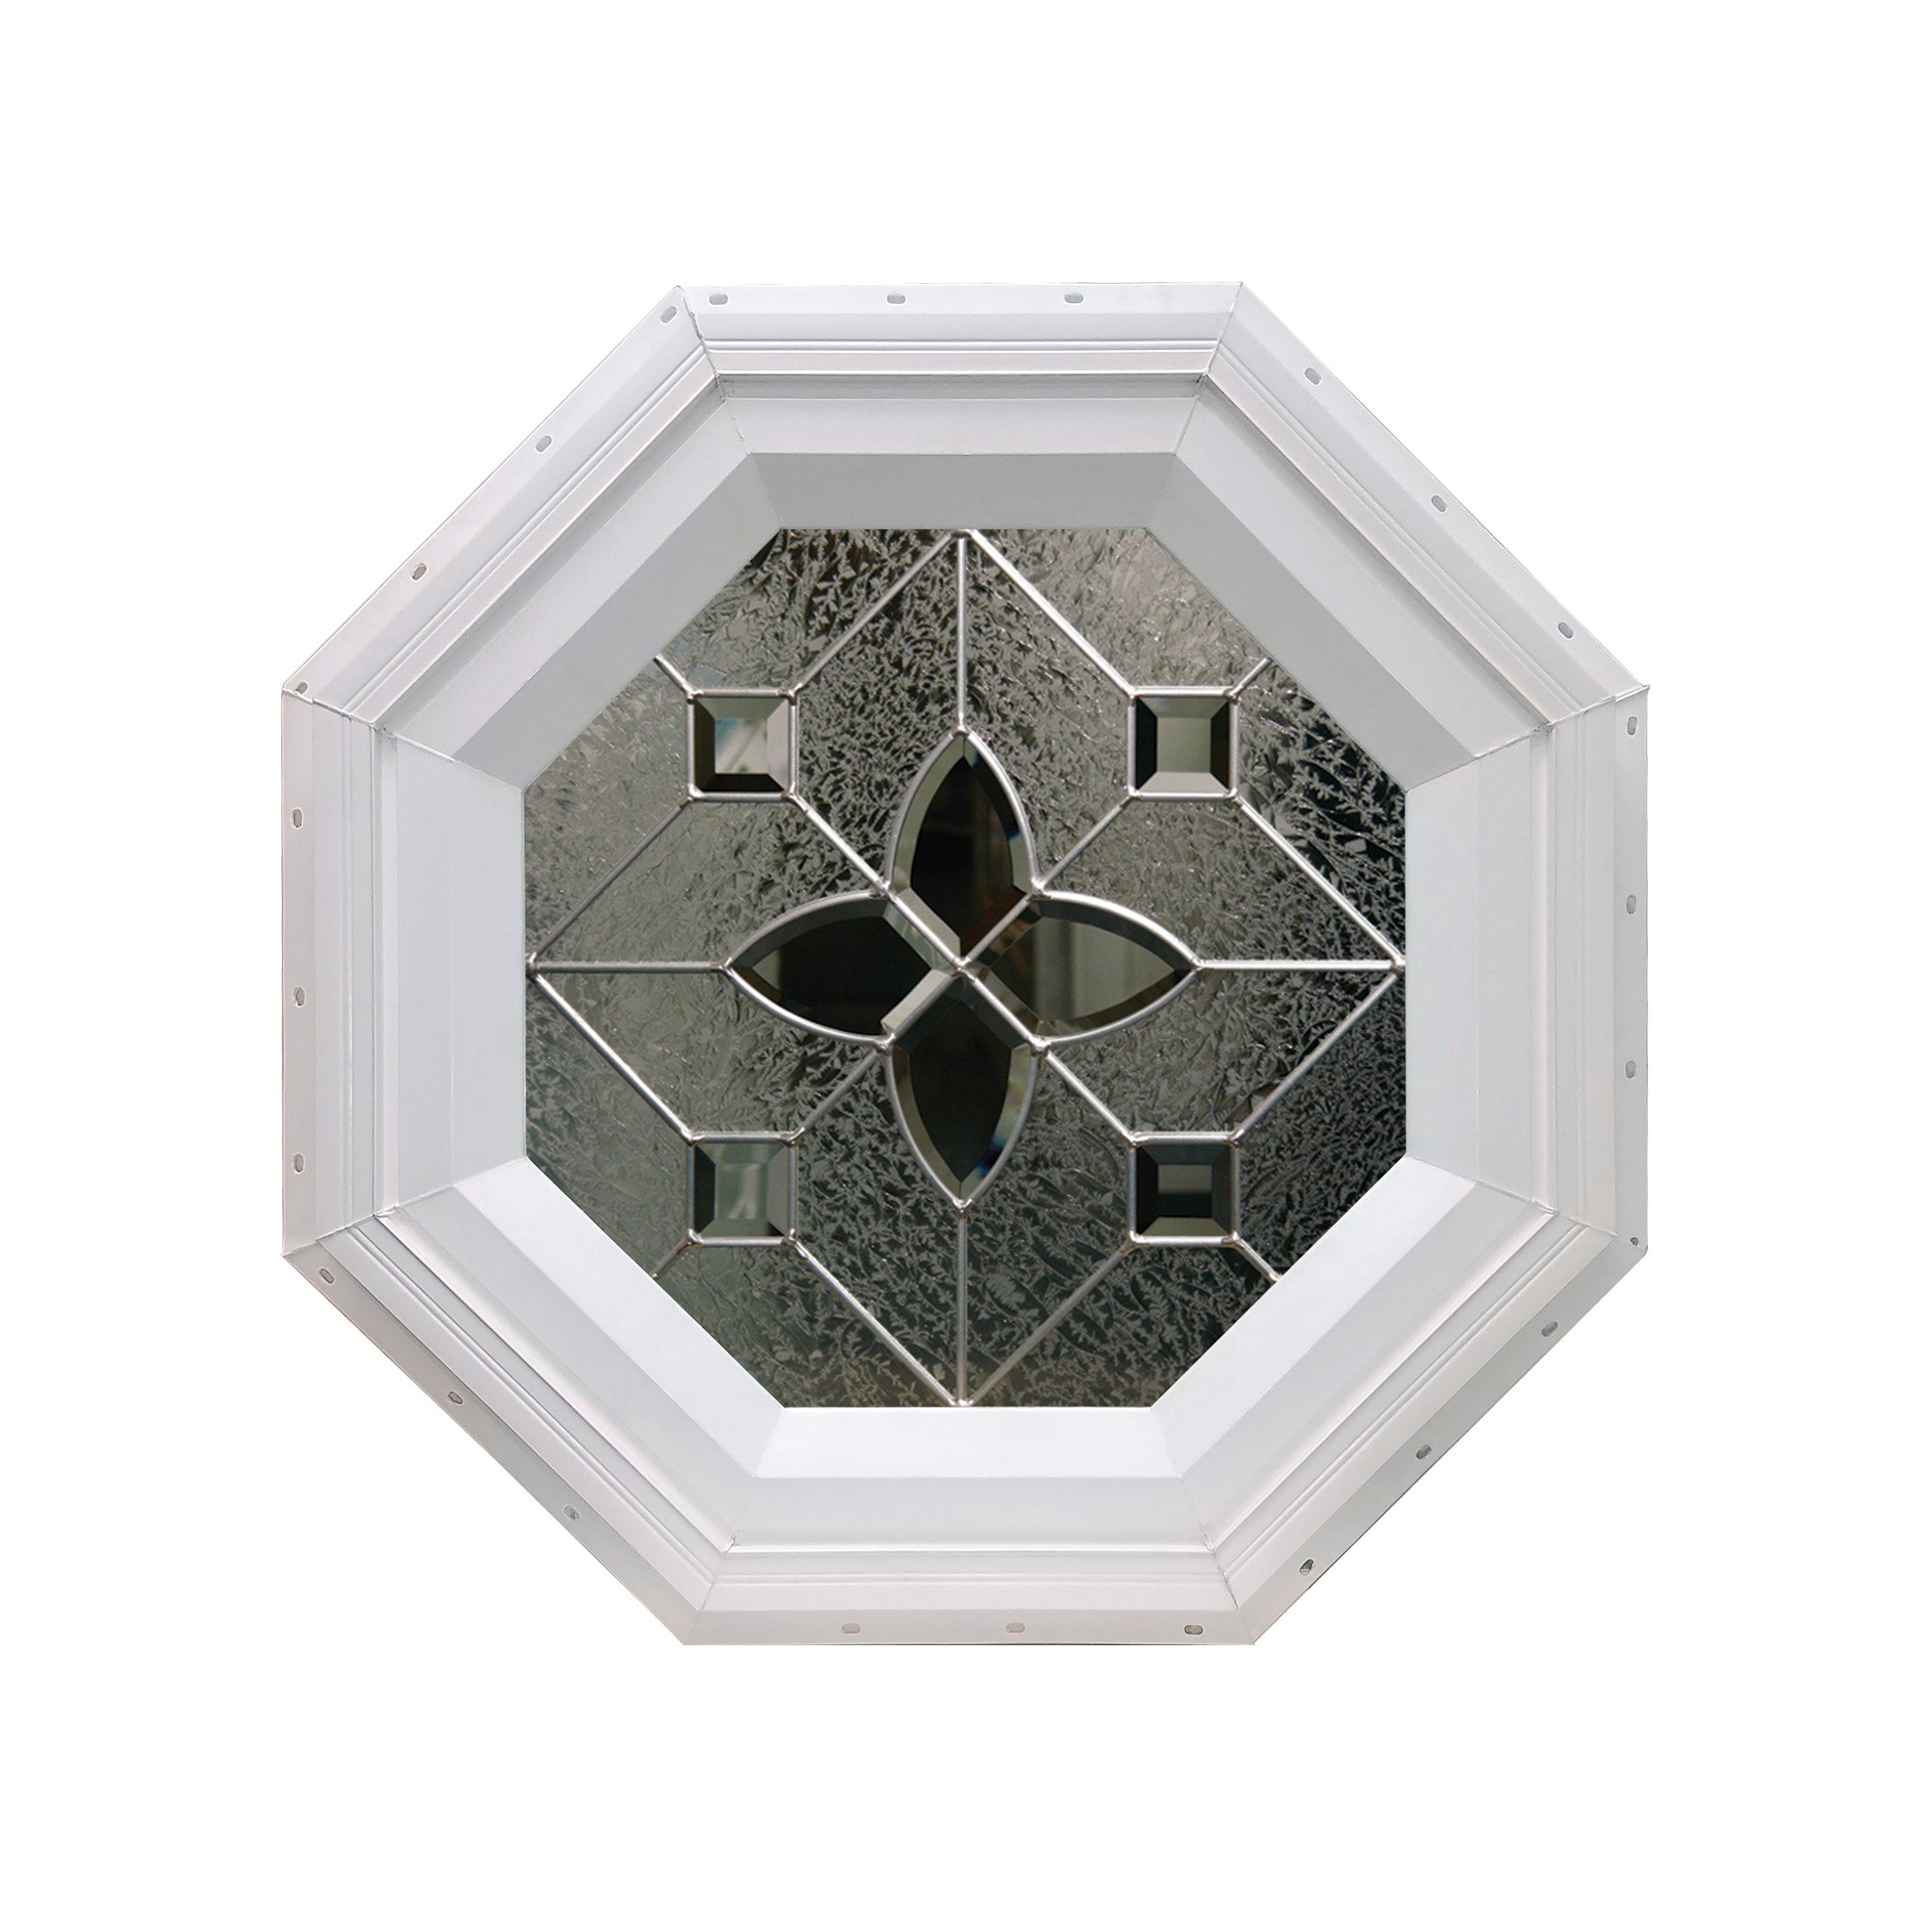 decorative octagon windows